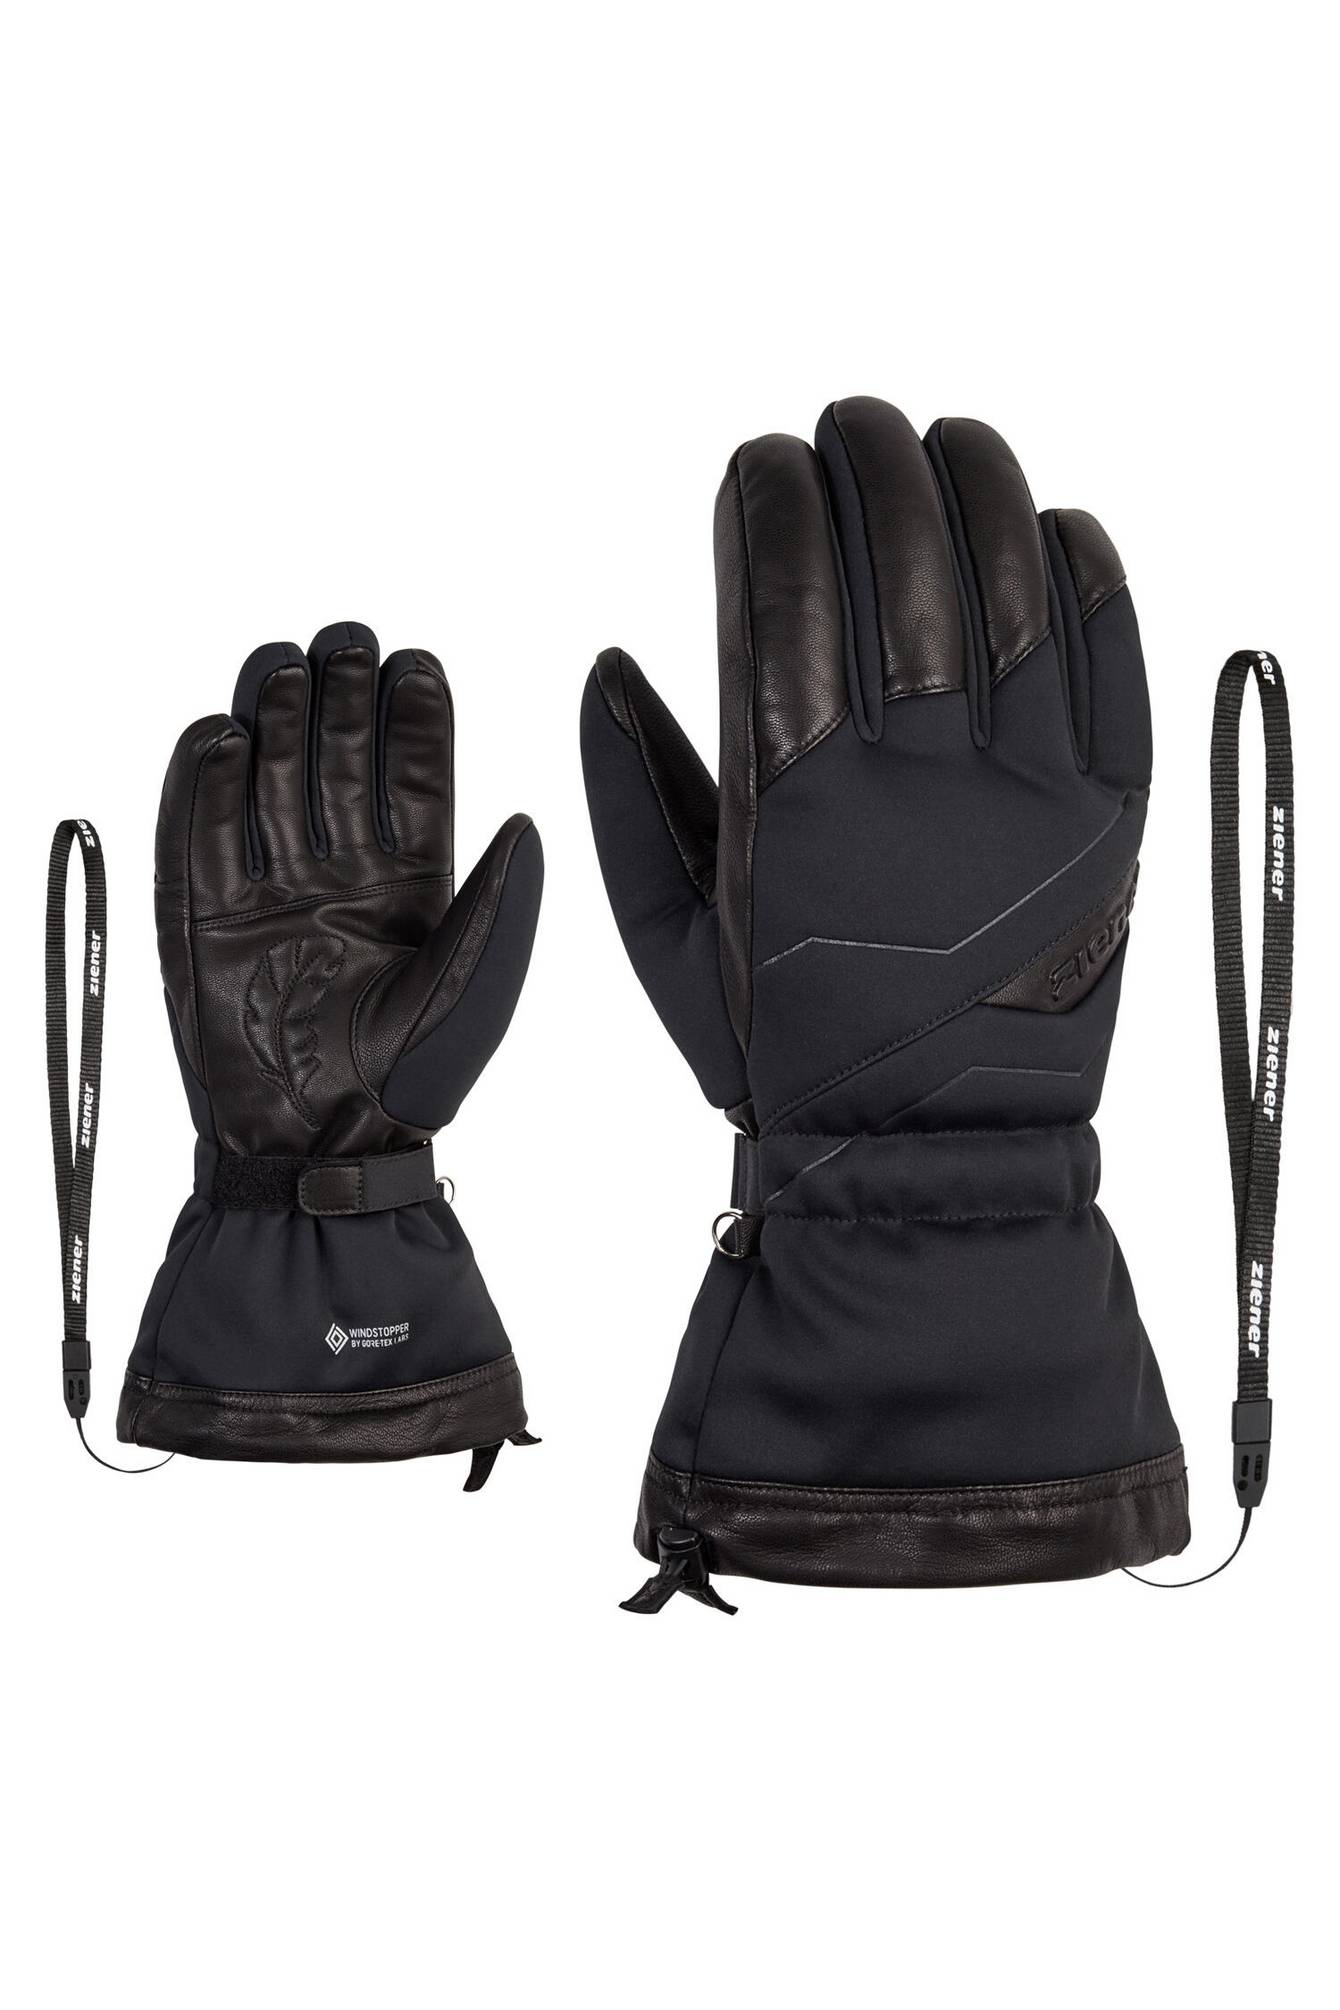 GANNO WS glove alpine ski | L&T